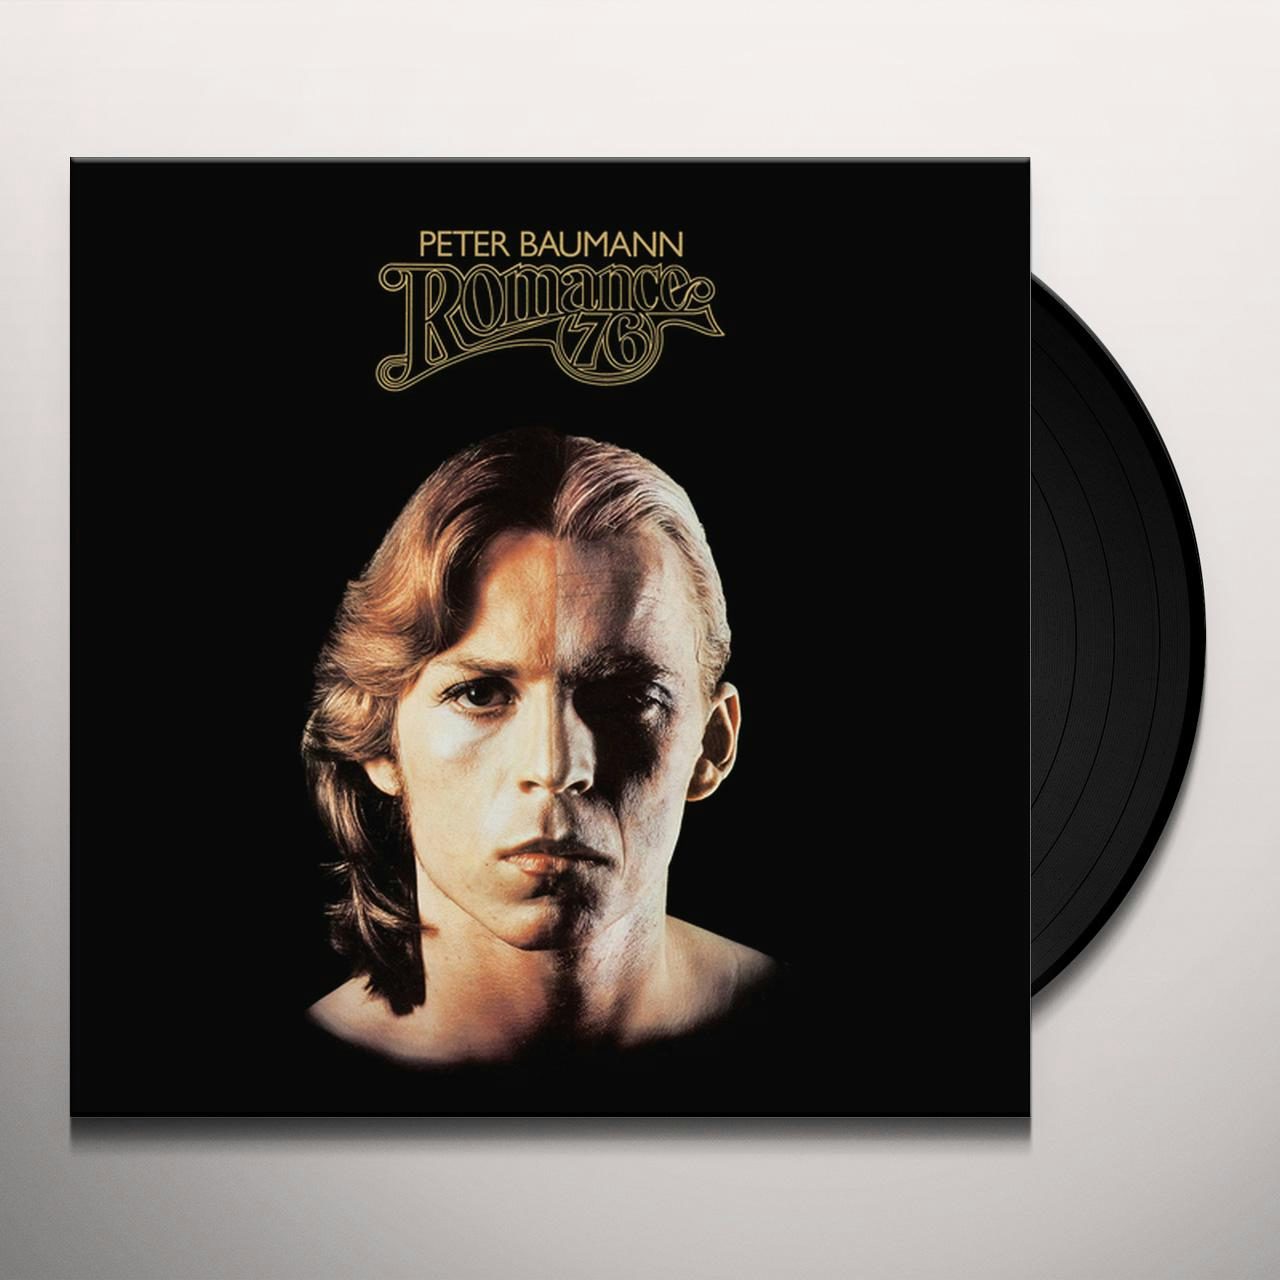 Peter Baumann Romance 76 Vinyl Record